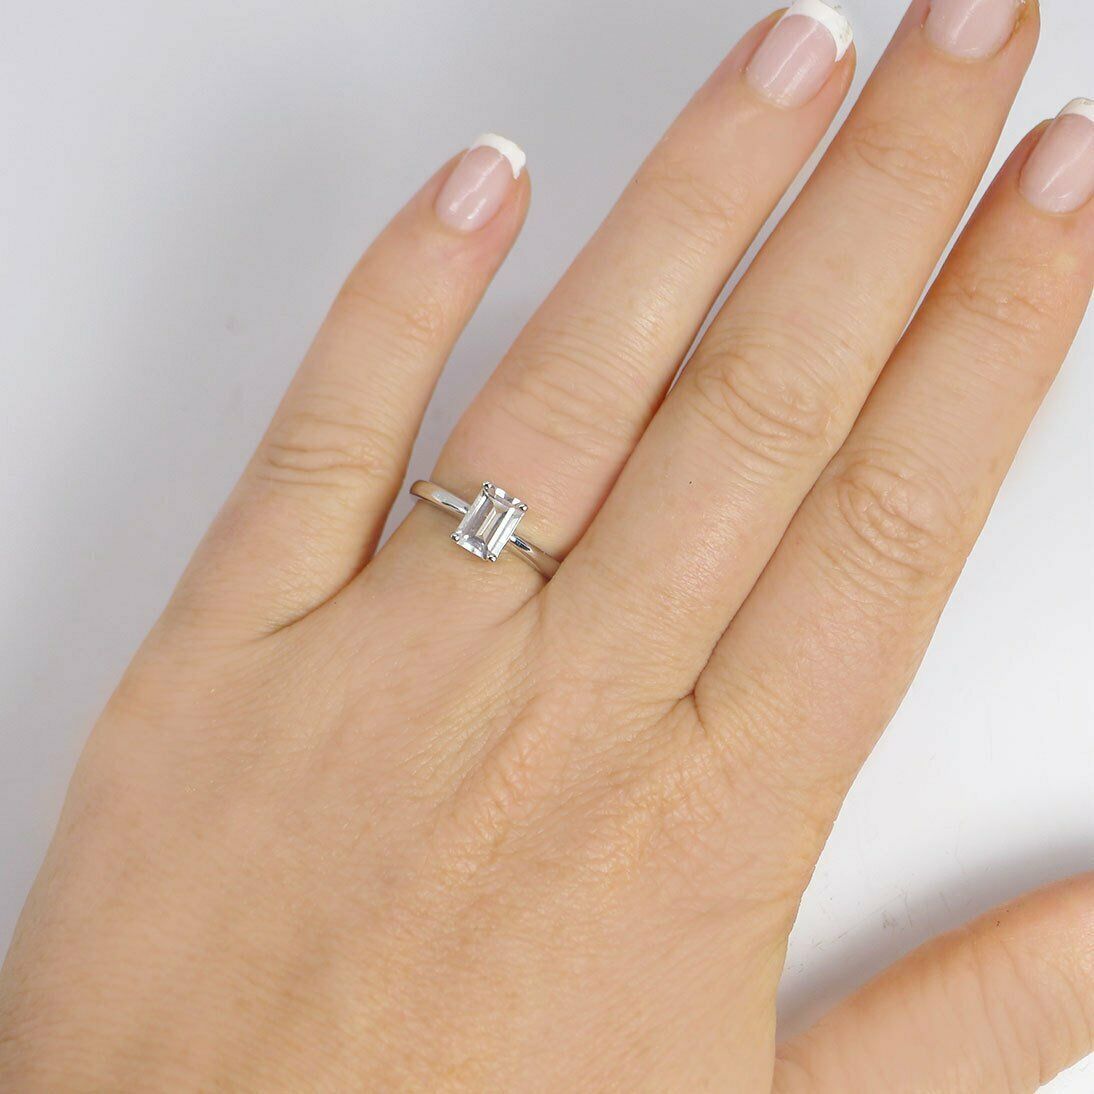 3ct White Emerald Cut Diamond Engagement Wedding Ring Real 14K white Gold 